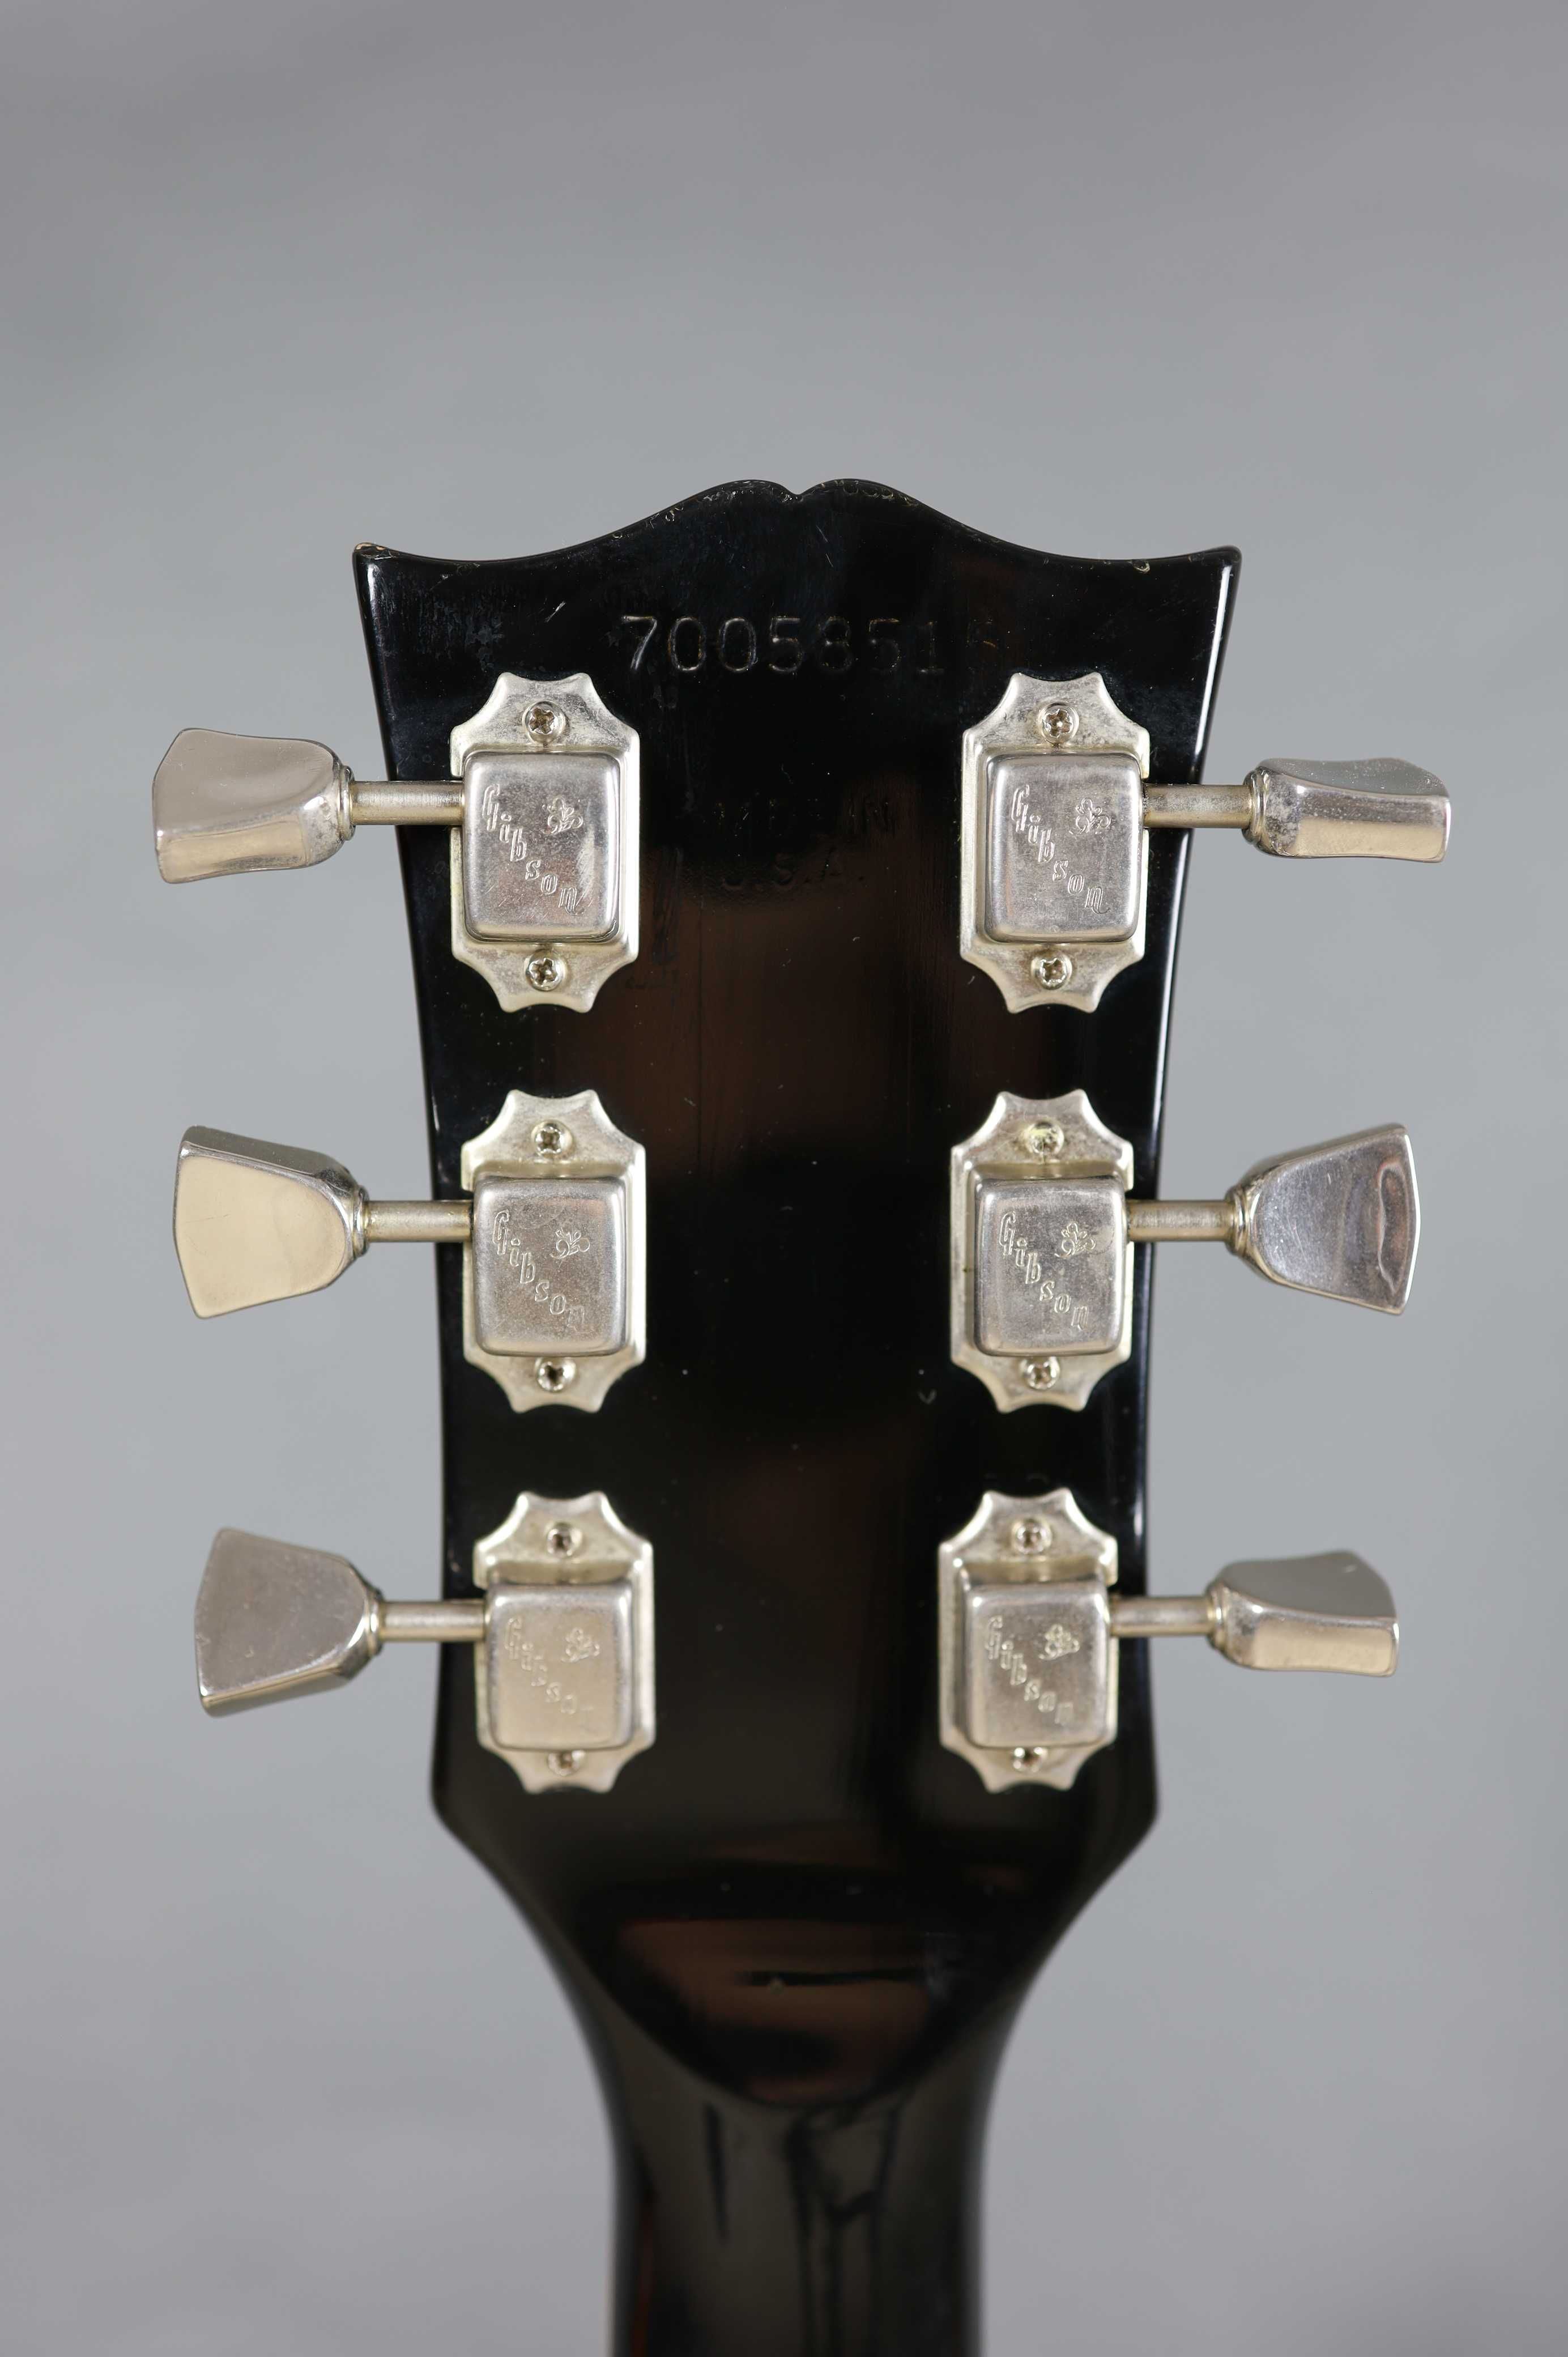 Gibson Les Paul Deluxe '1978 - (original vintage) - Вінтажна, ВІДЕО